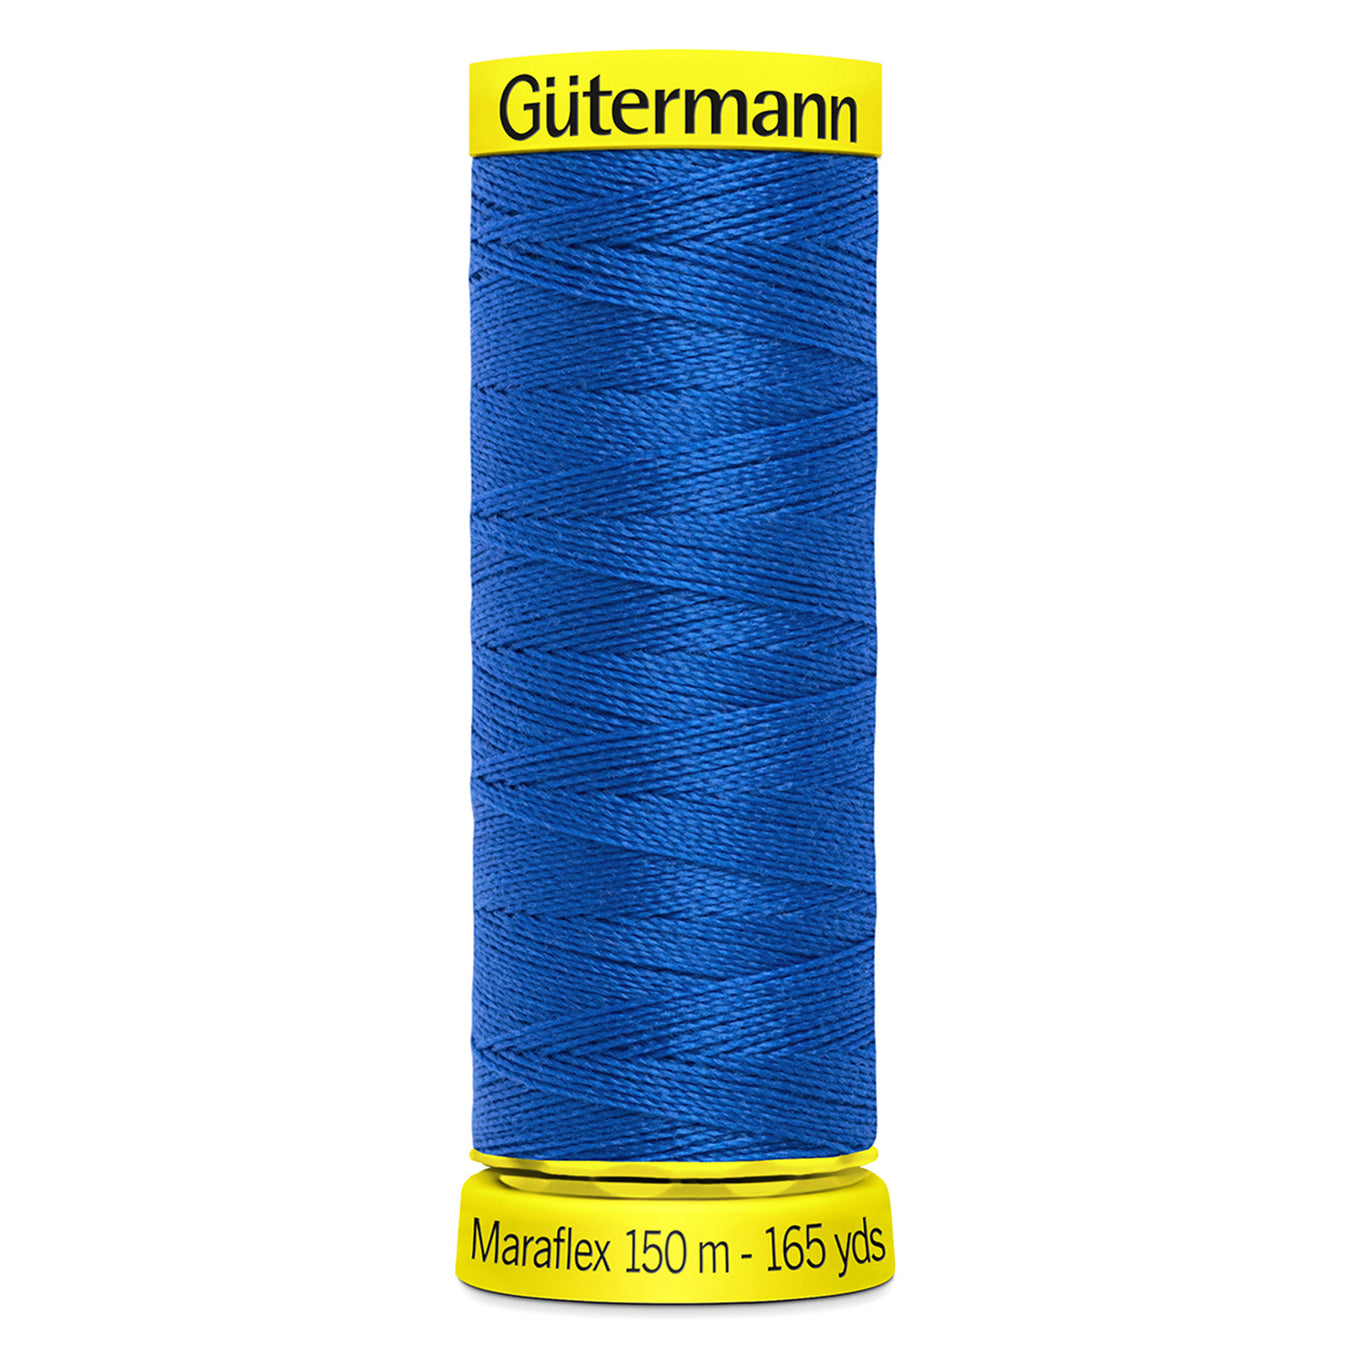 Gutermann Maraflex sewing thread